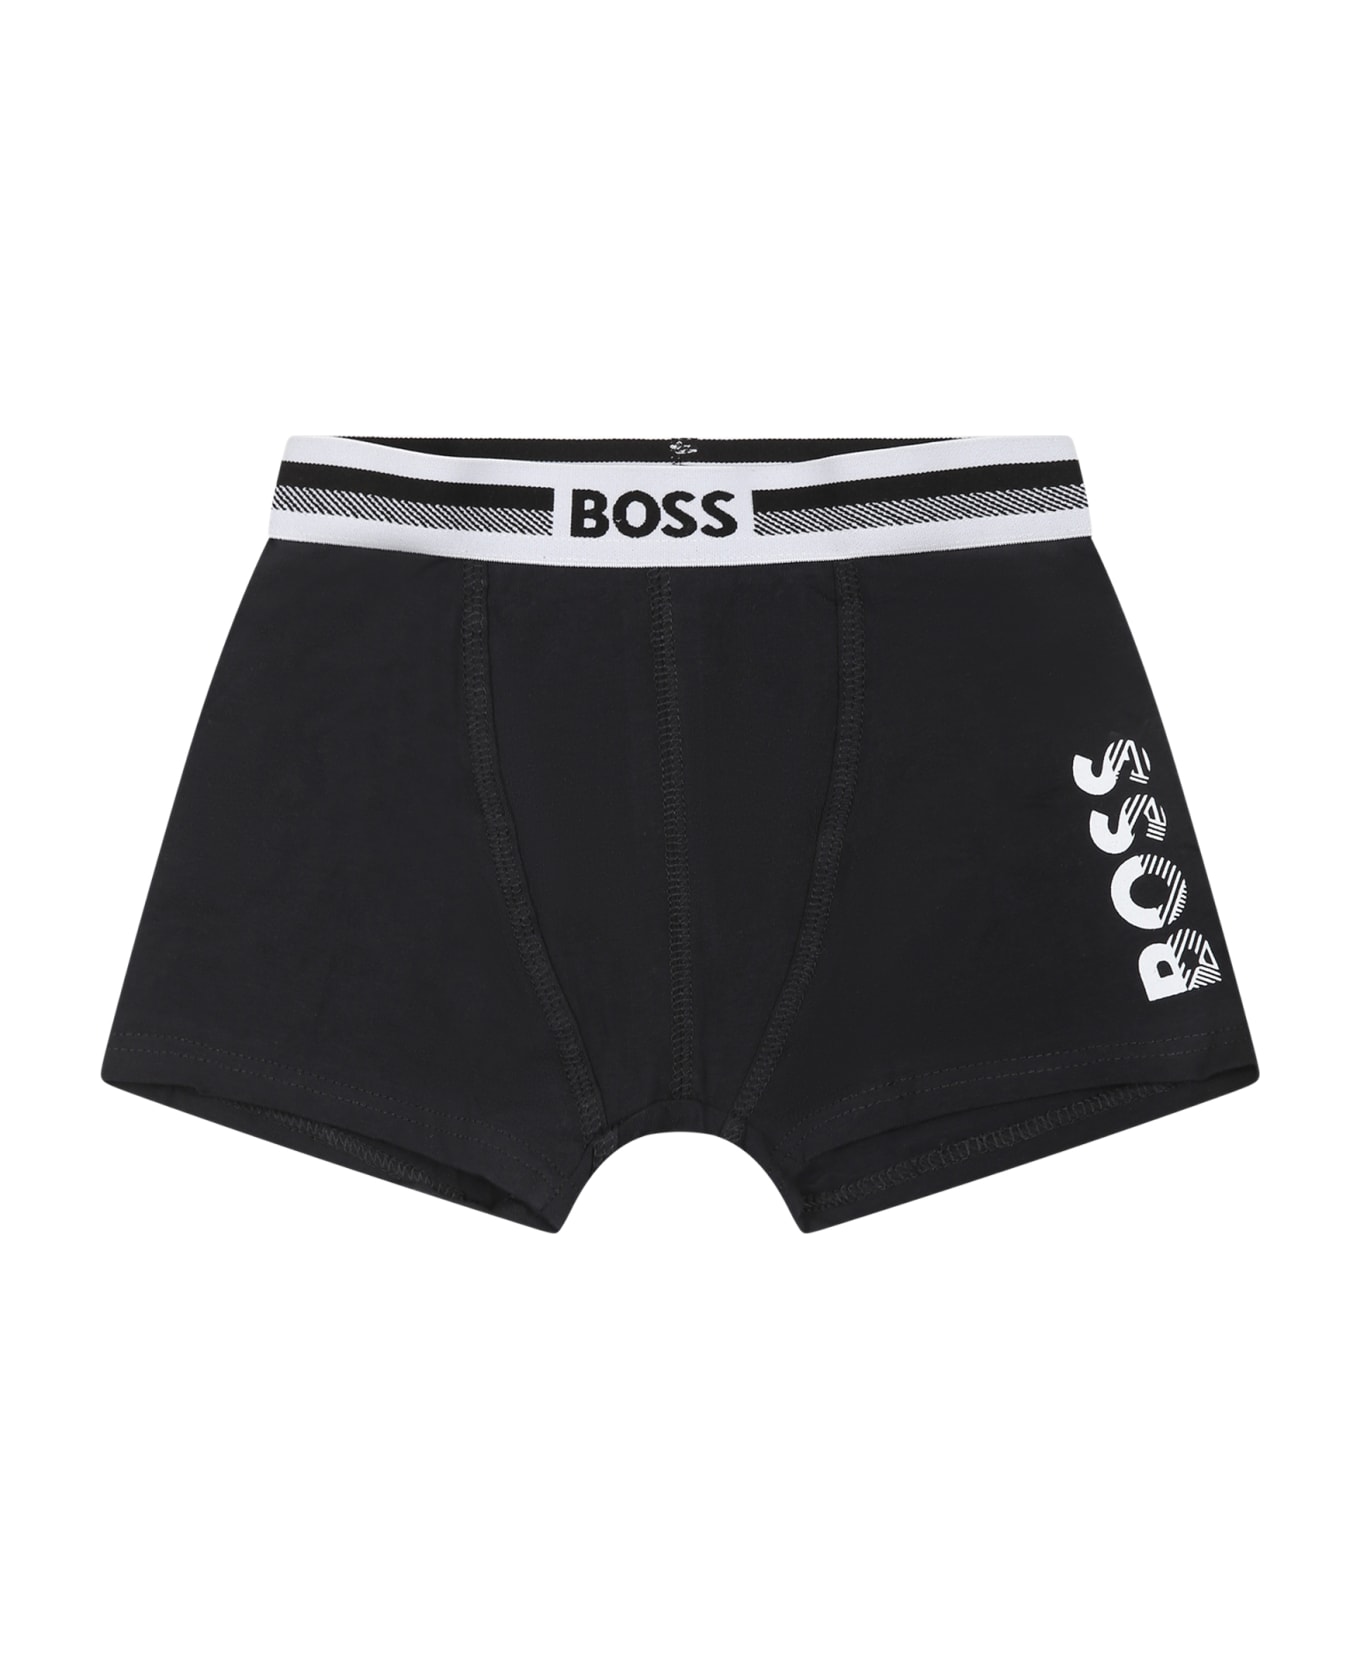 Hugo Boss Black Set For Boy With Logo - Black